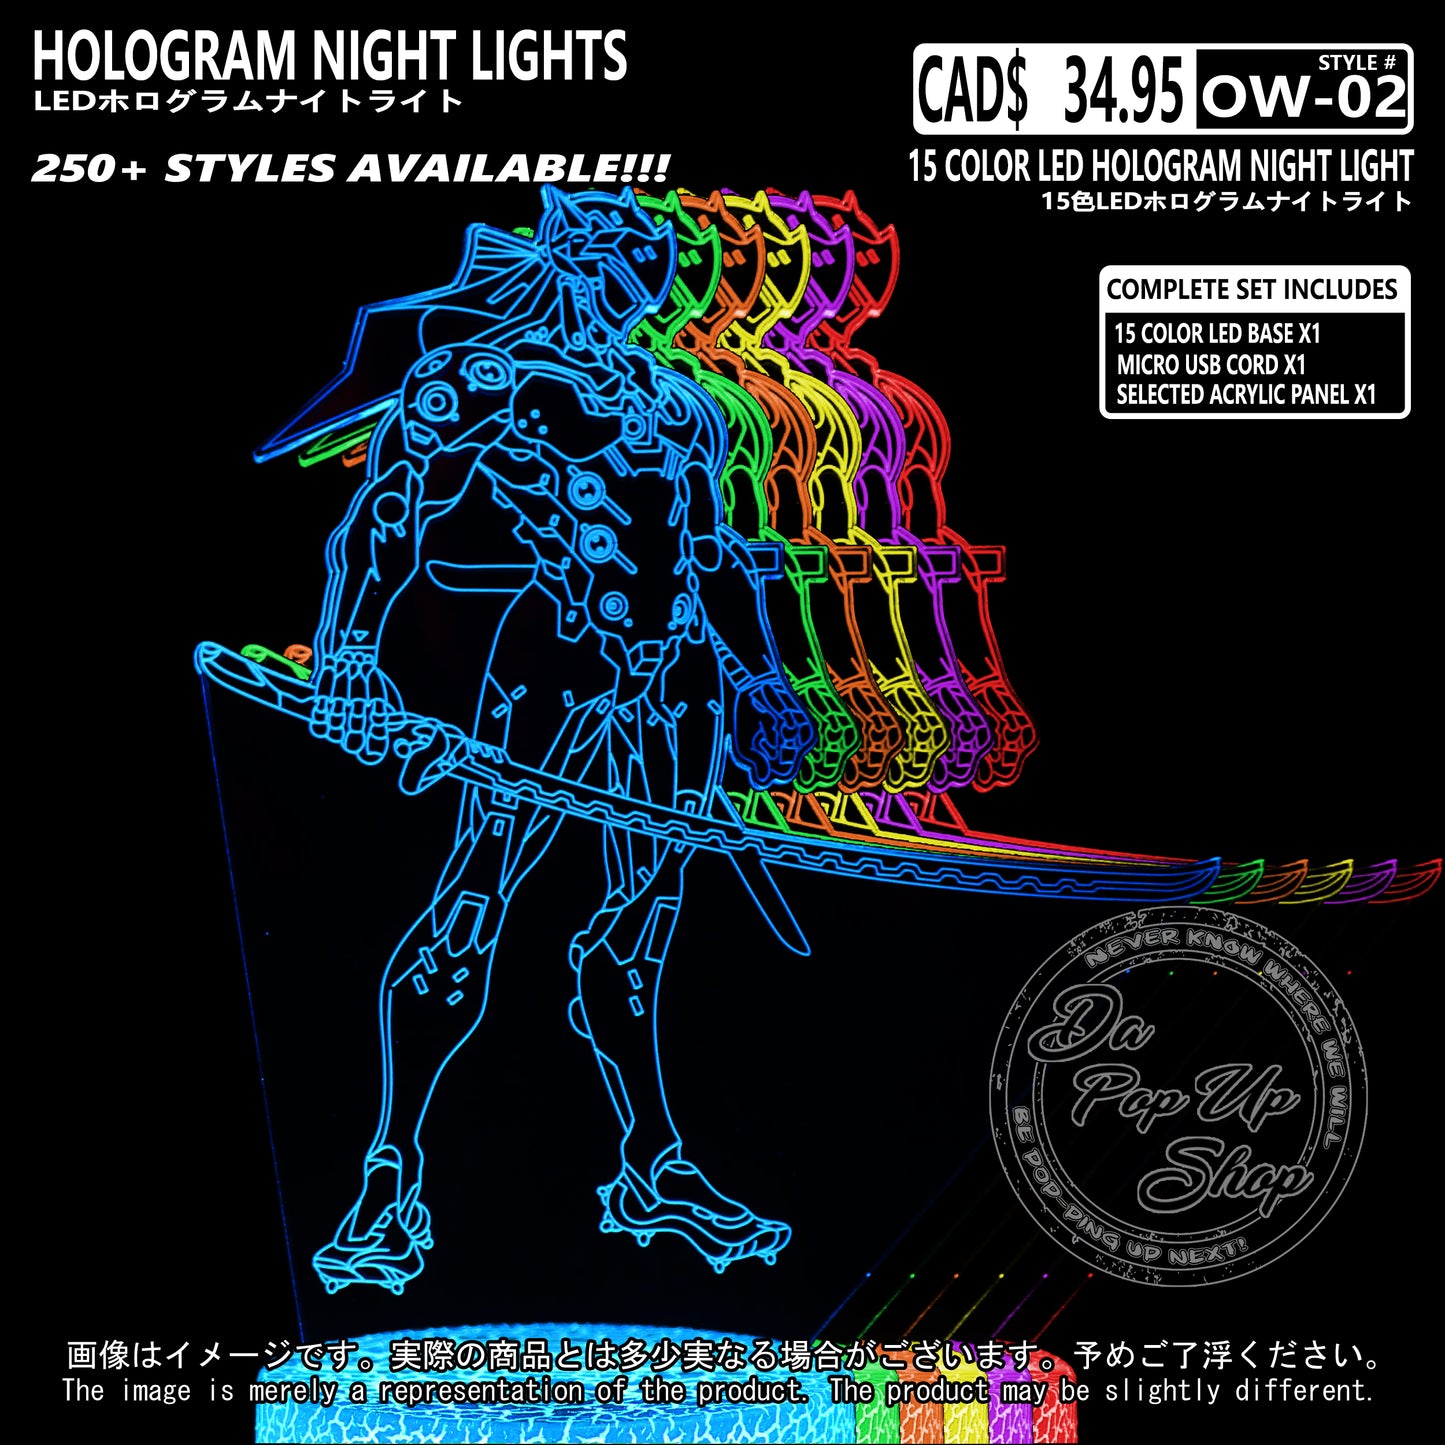 (OW-02) GENJI Overwatch Hologram LED Night Light